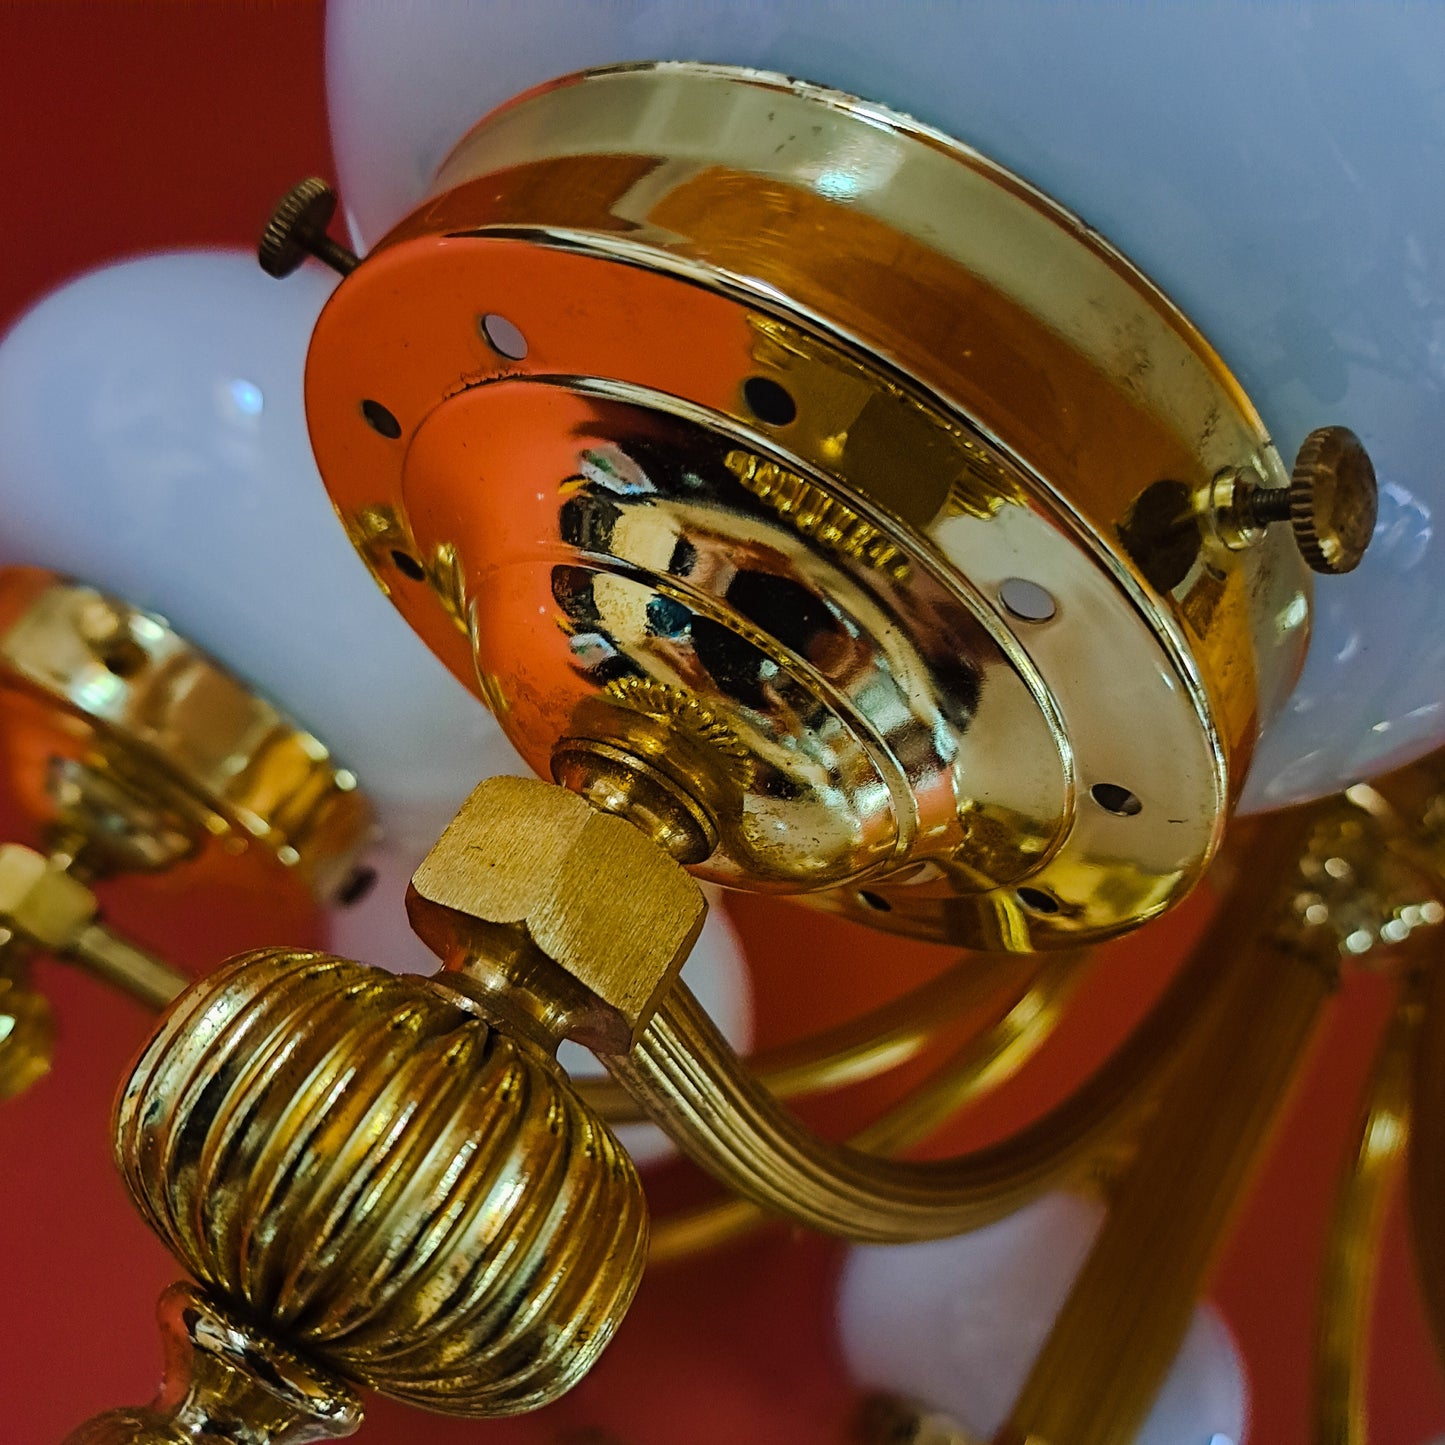 Large and impressive Viennese antique 8 globe brass chandelier